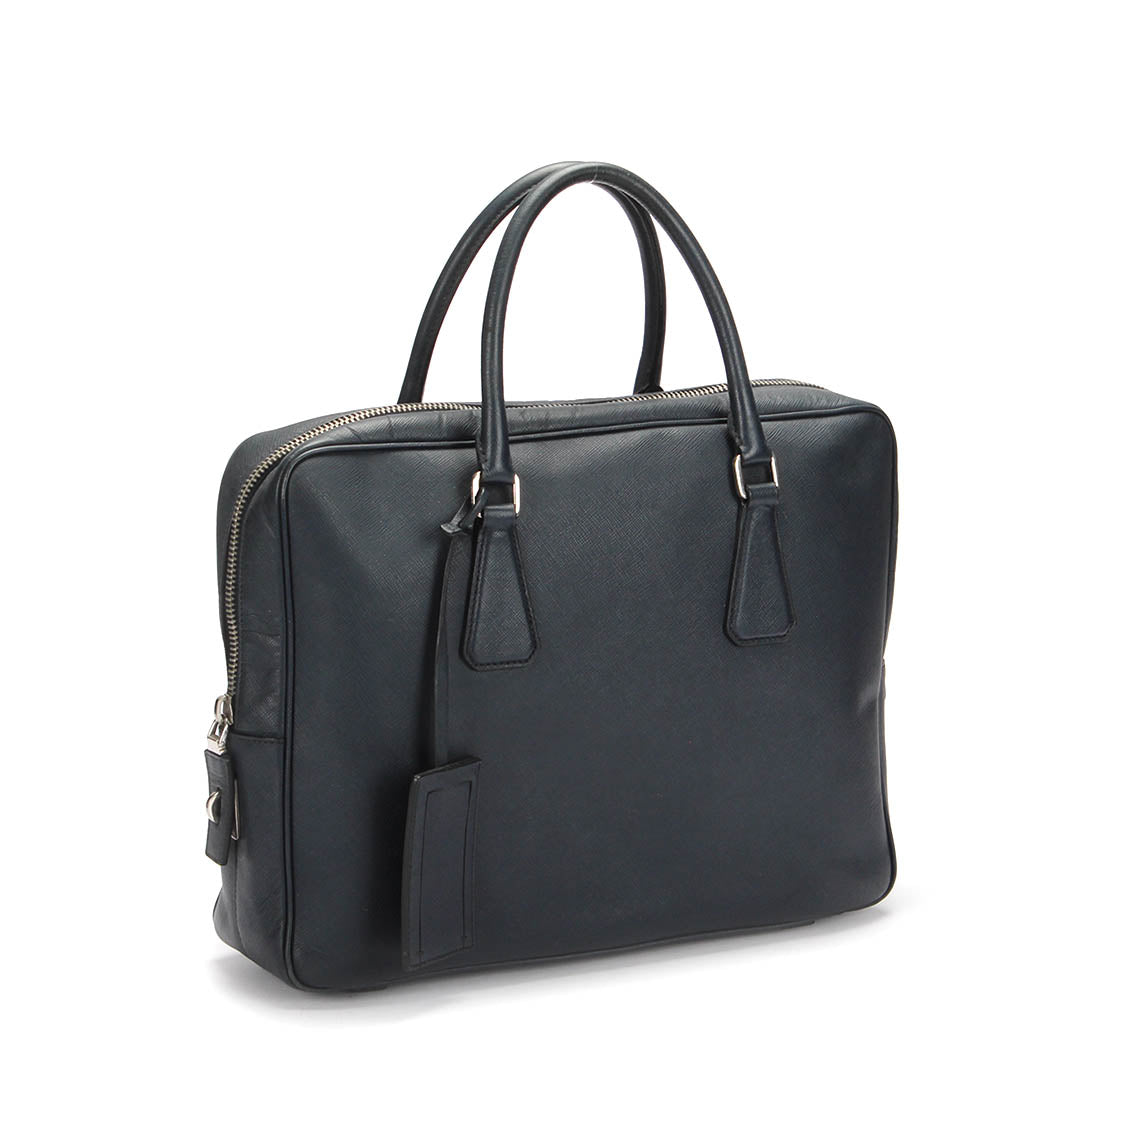 Prada Saffiano Briefcase Leather Business Bag in Good condition